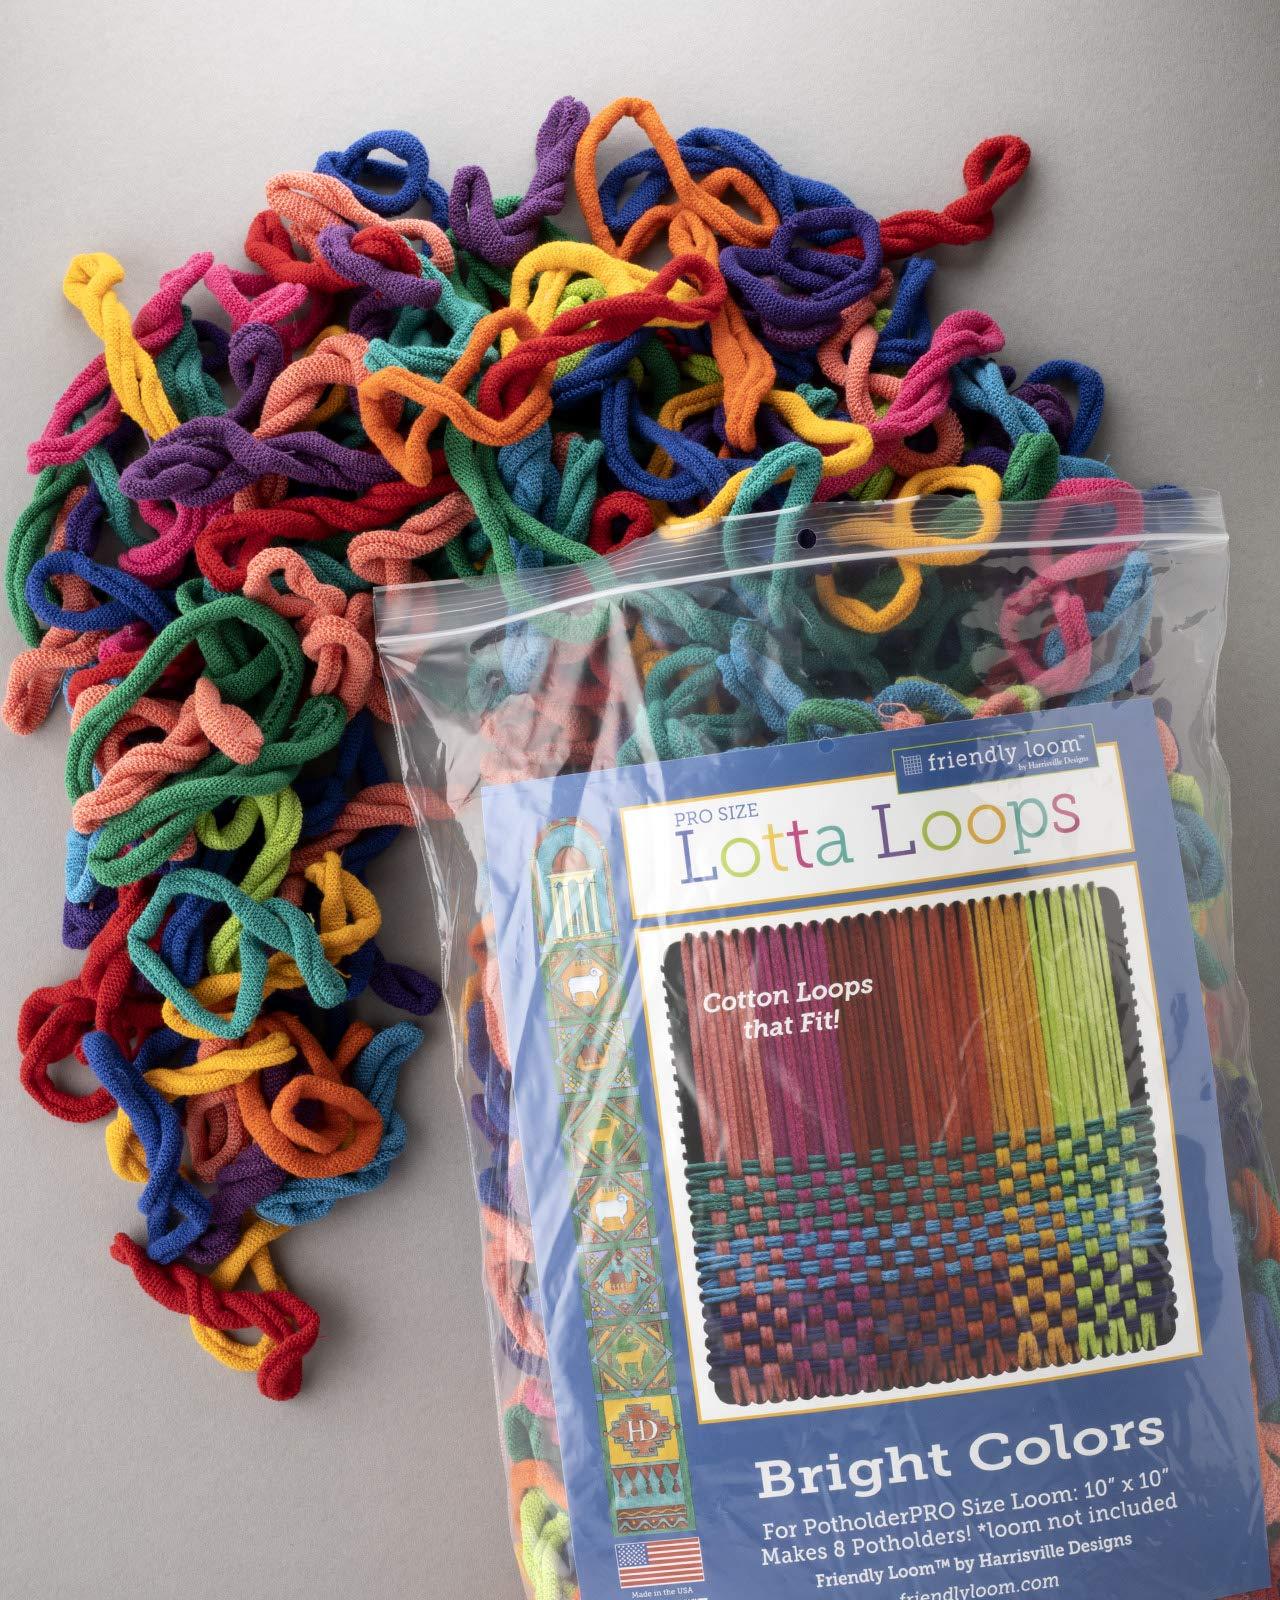 Lotta Loops